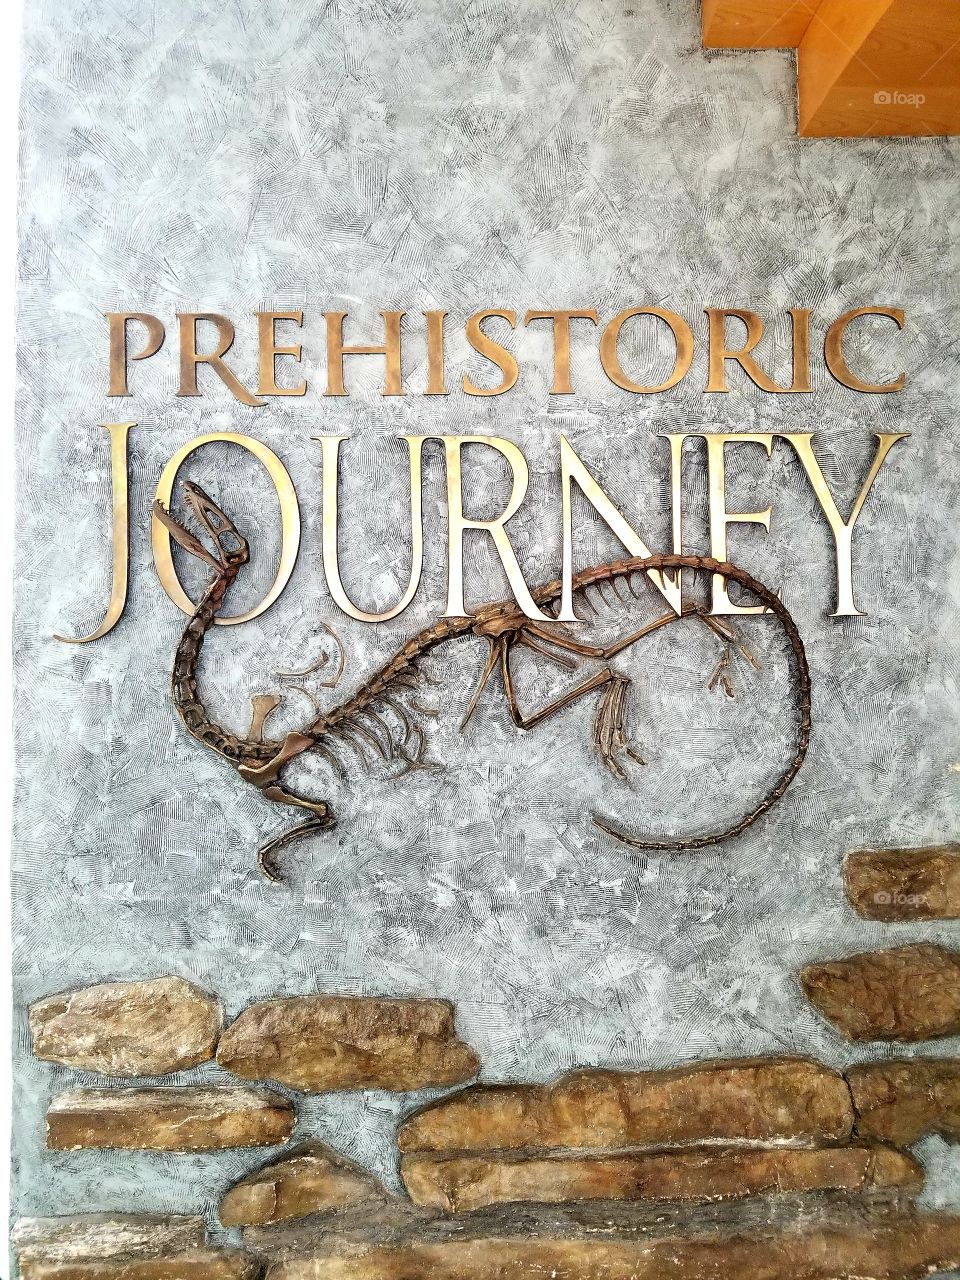 Prehistoric Display